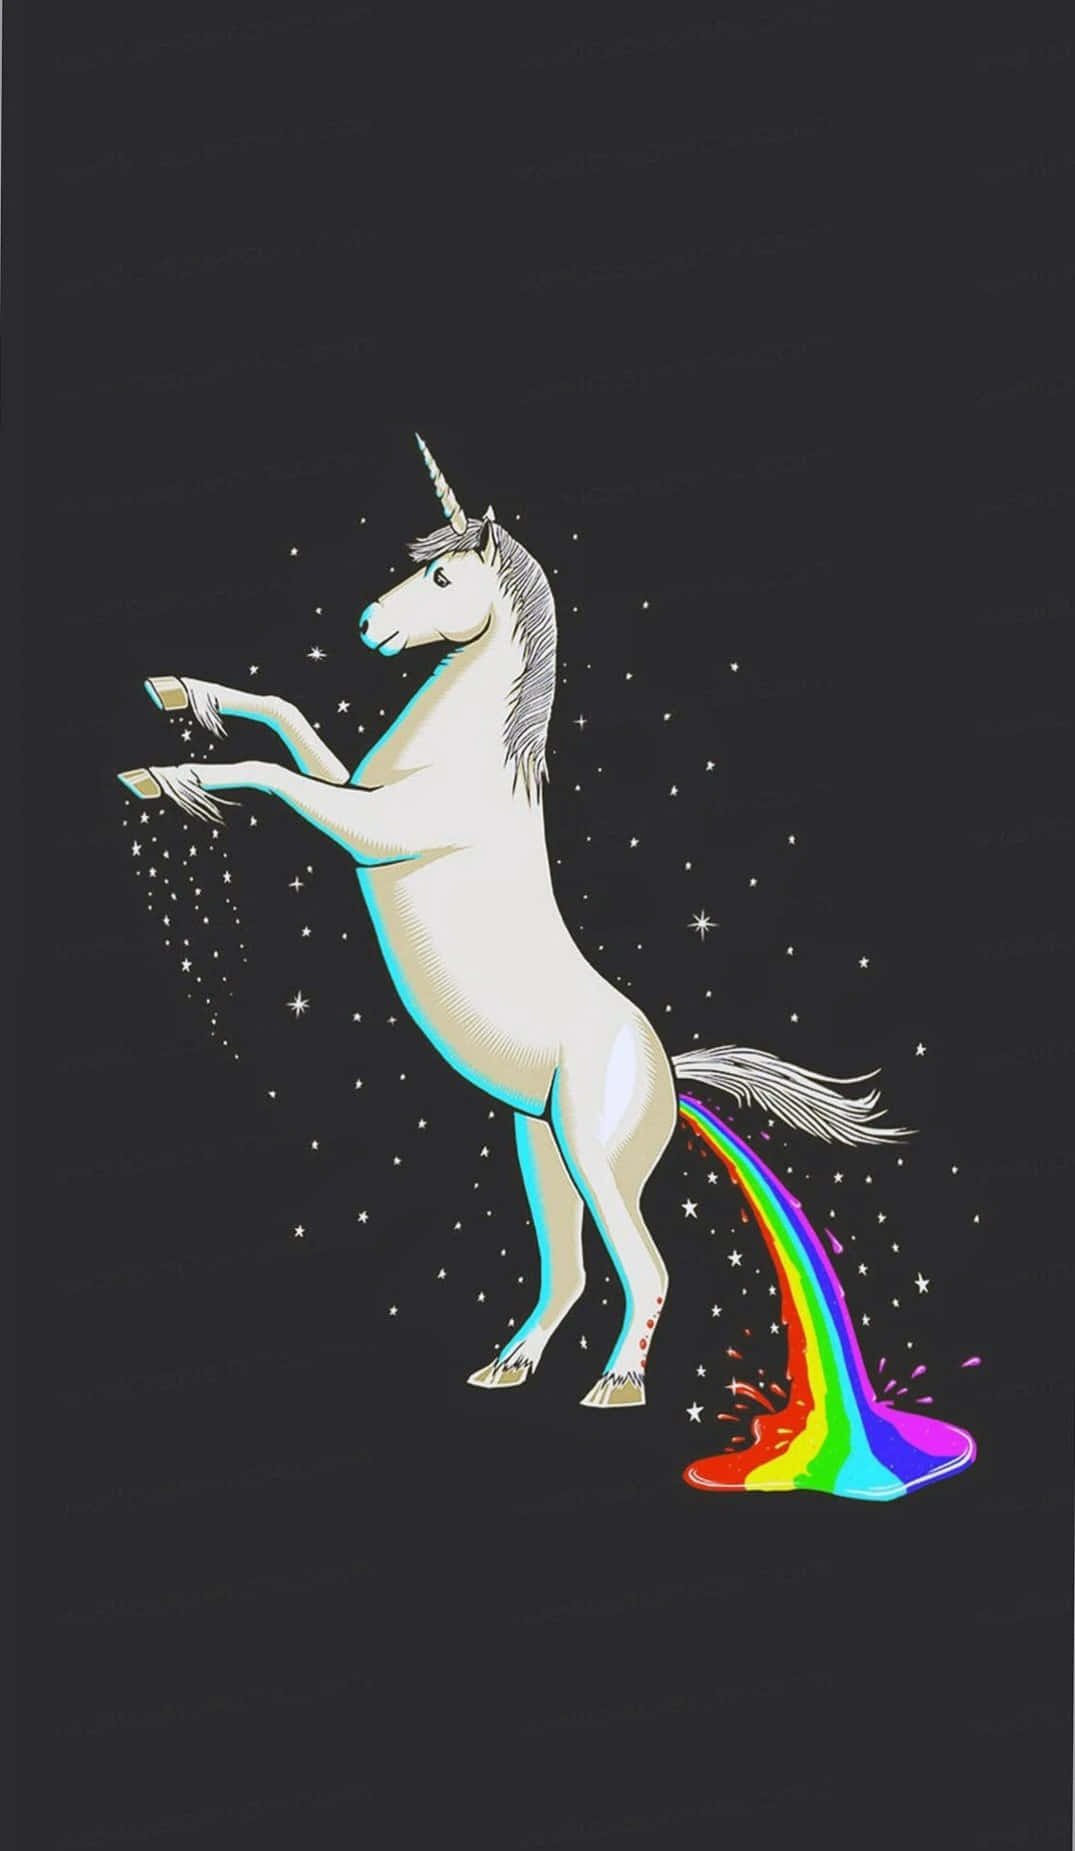 Sparkling rainbows and a happy unicorn make a magical scene!